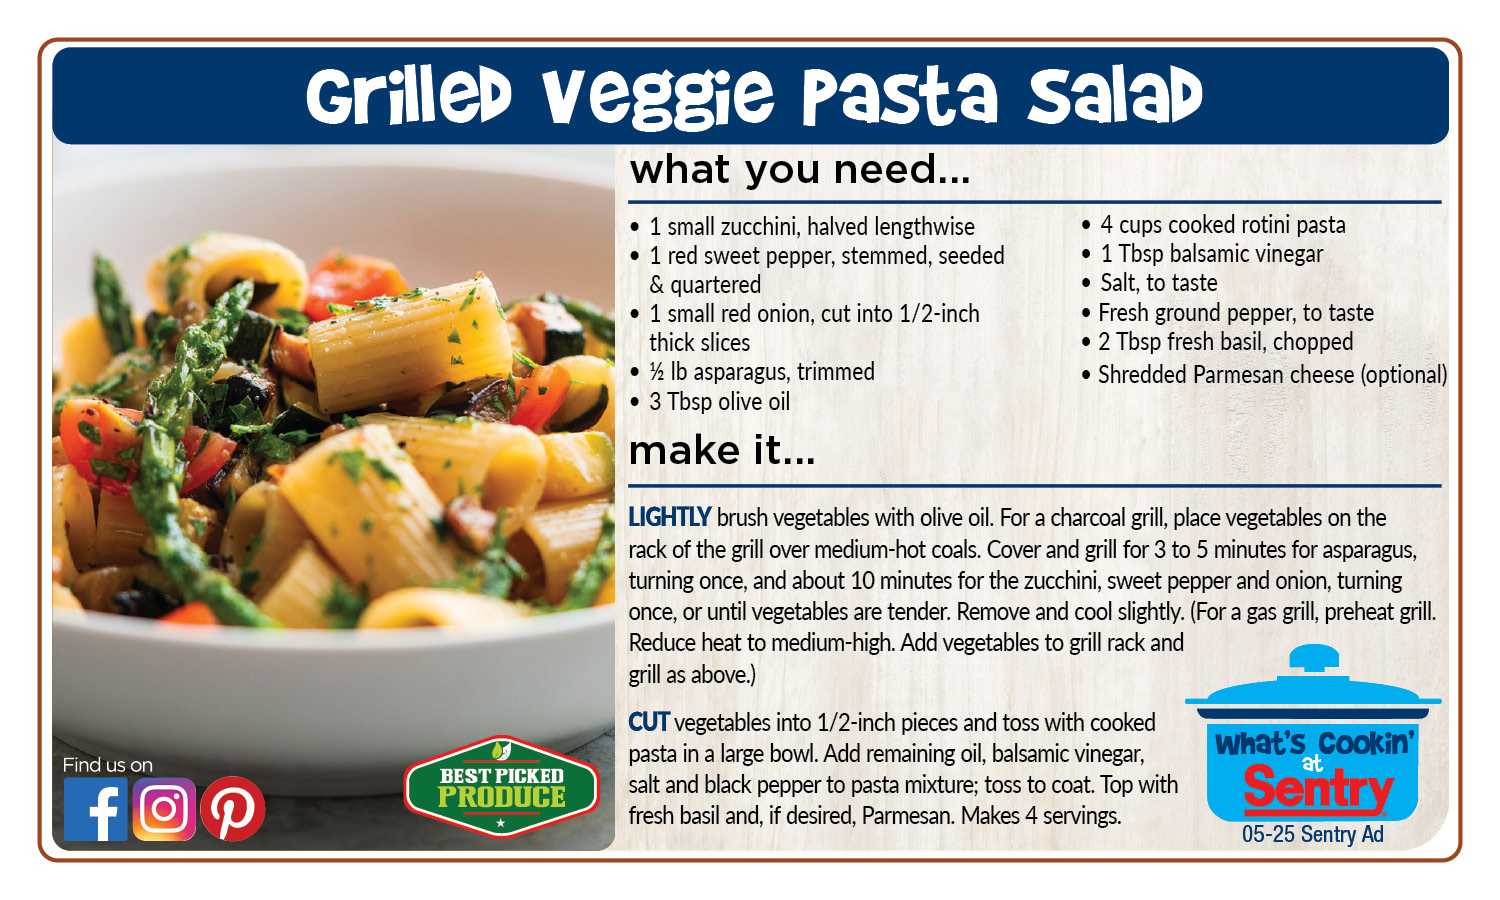 Grilled Veggie Pasta Salad